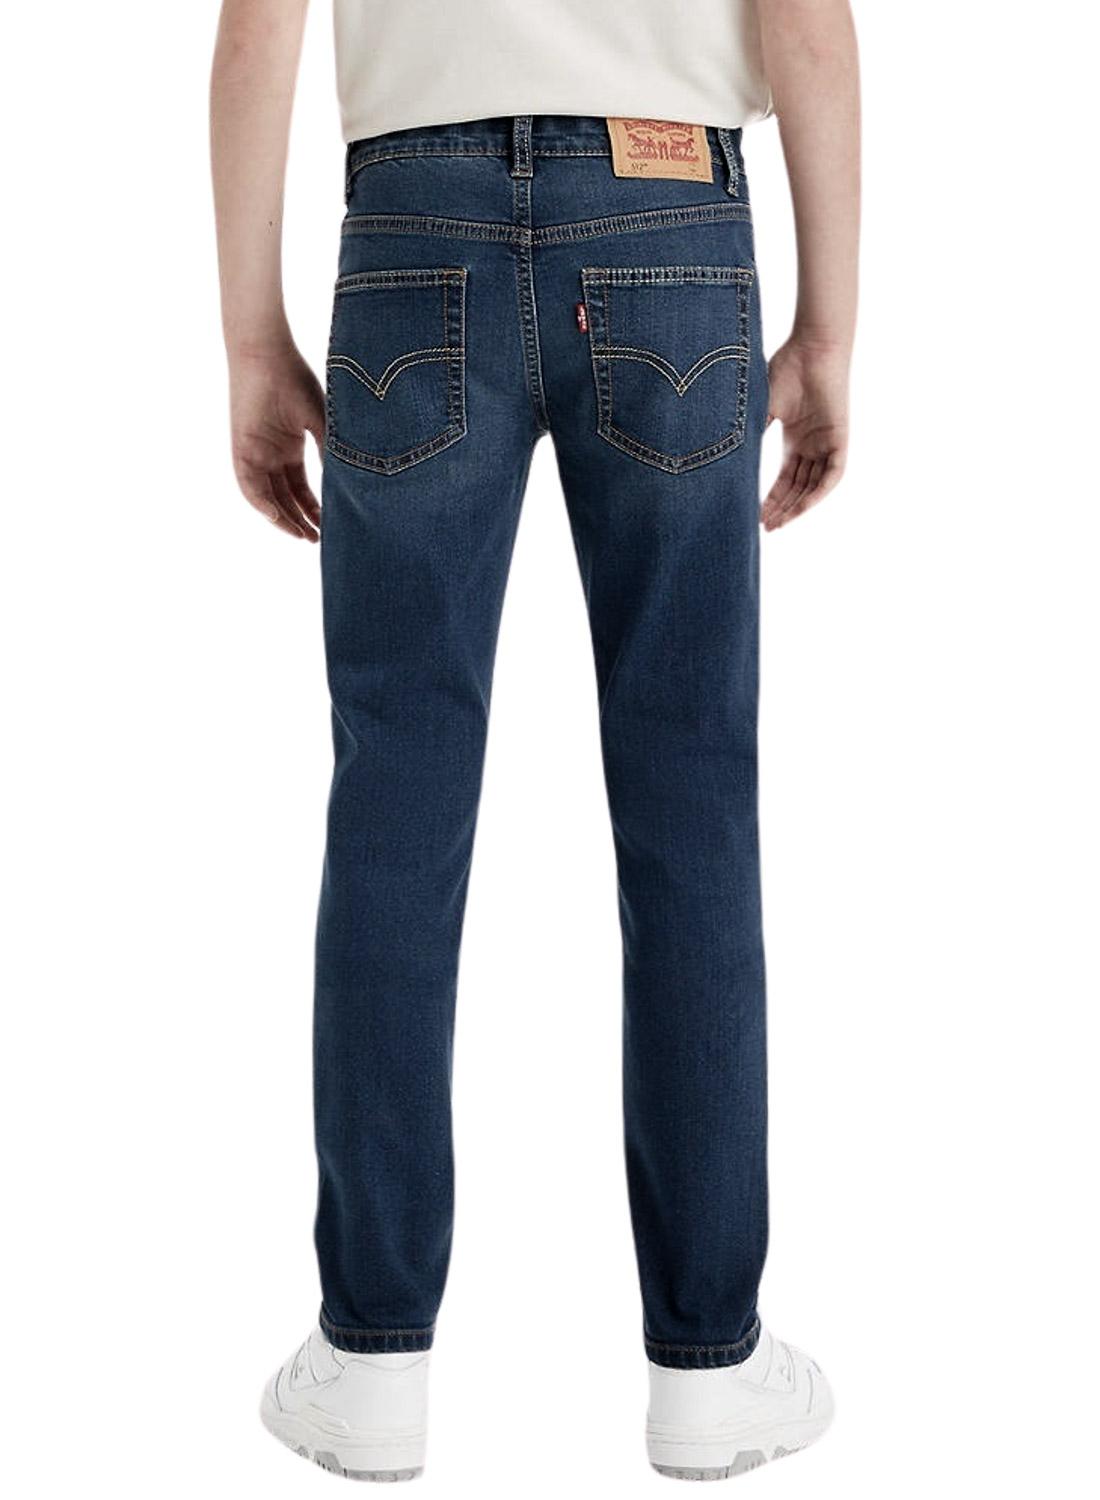 Pantaloni Jeans Levis 512 Slim Taper Denim Bambino